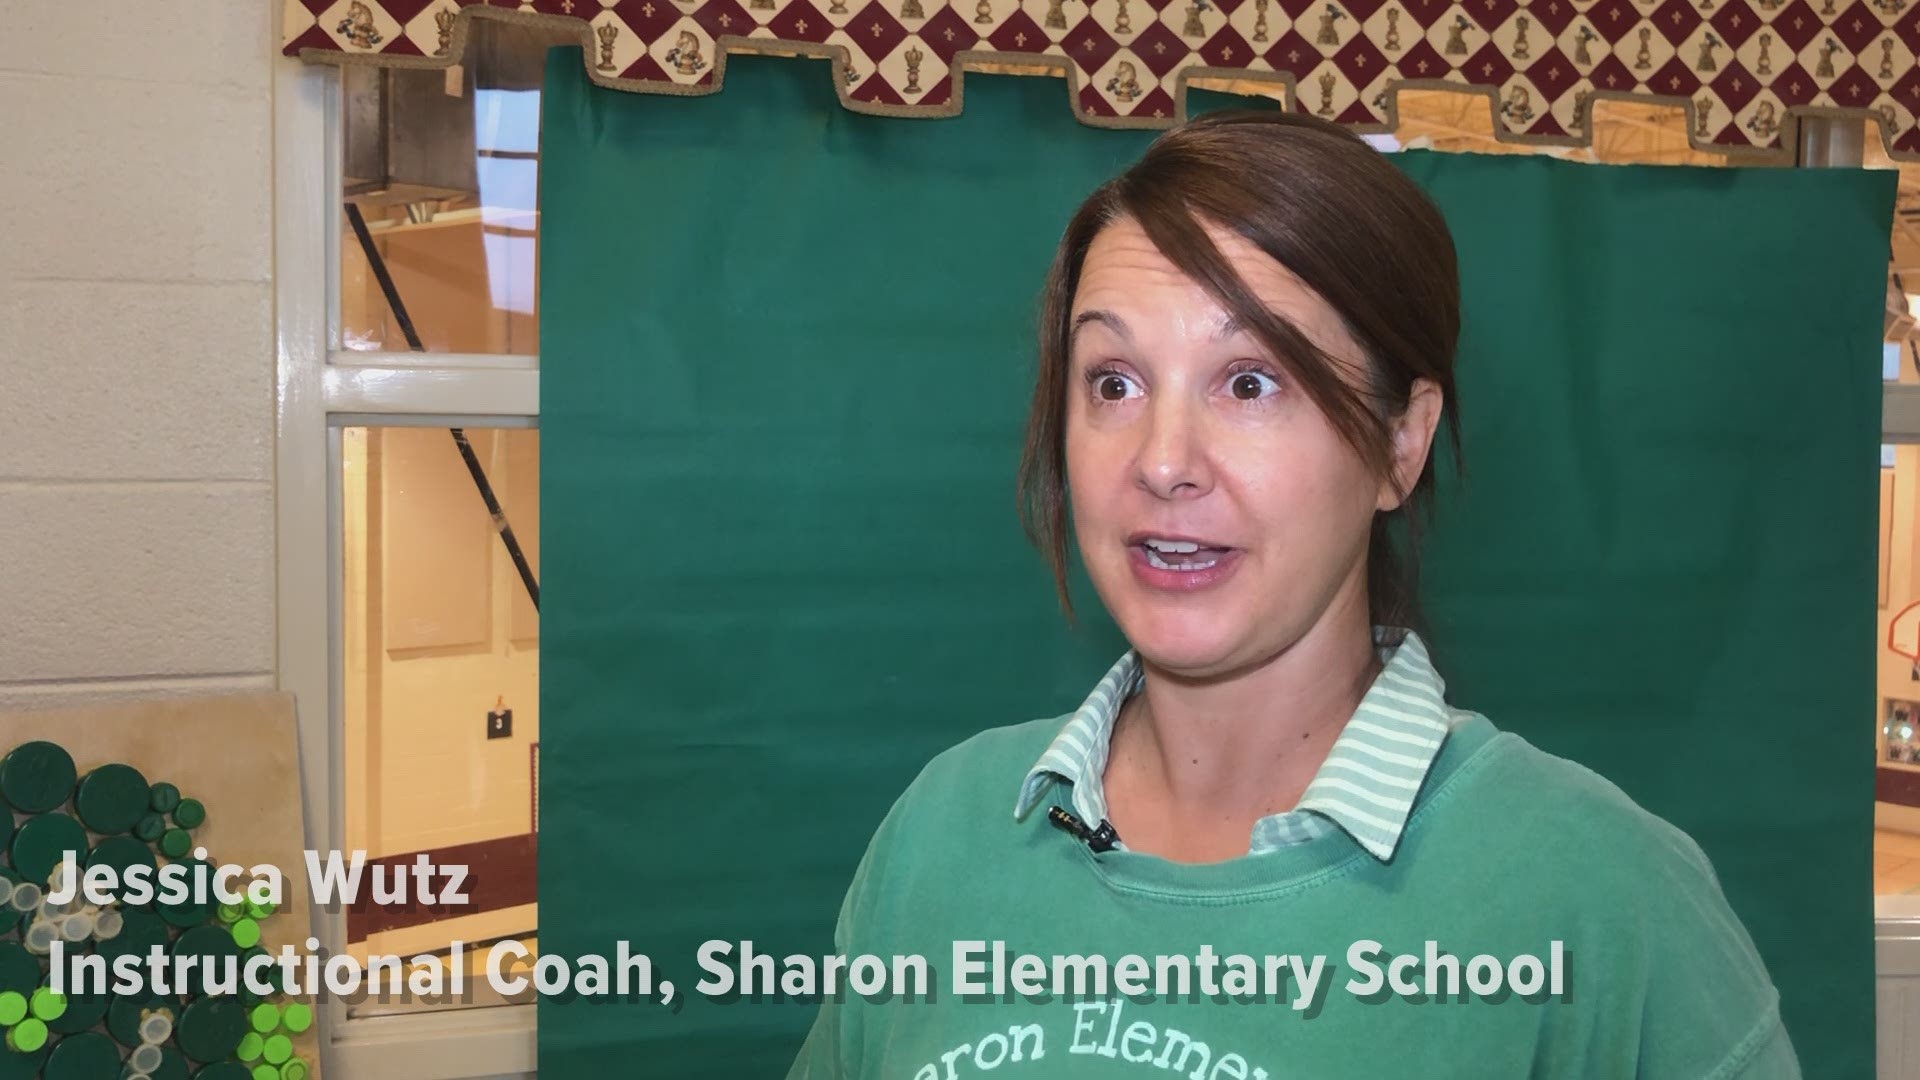 Video of Hallogreen at Sharon Elementary School.